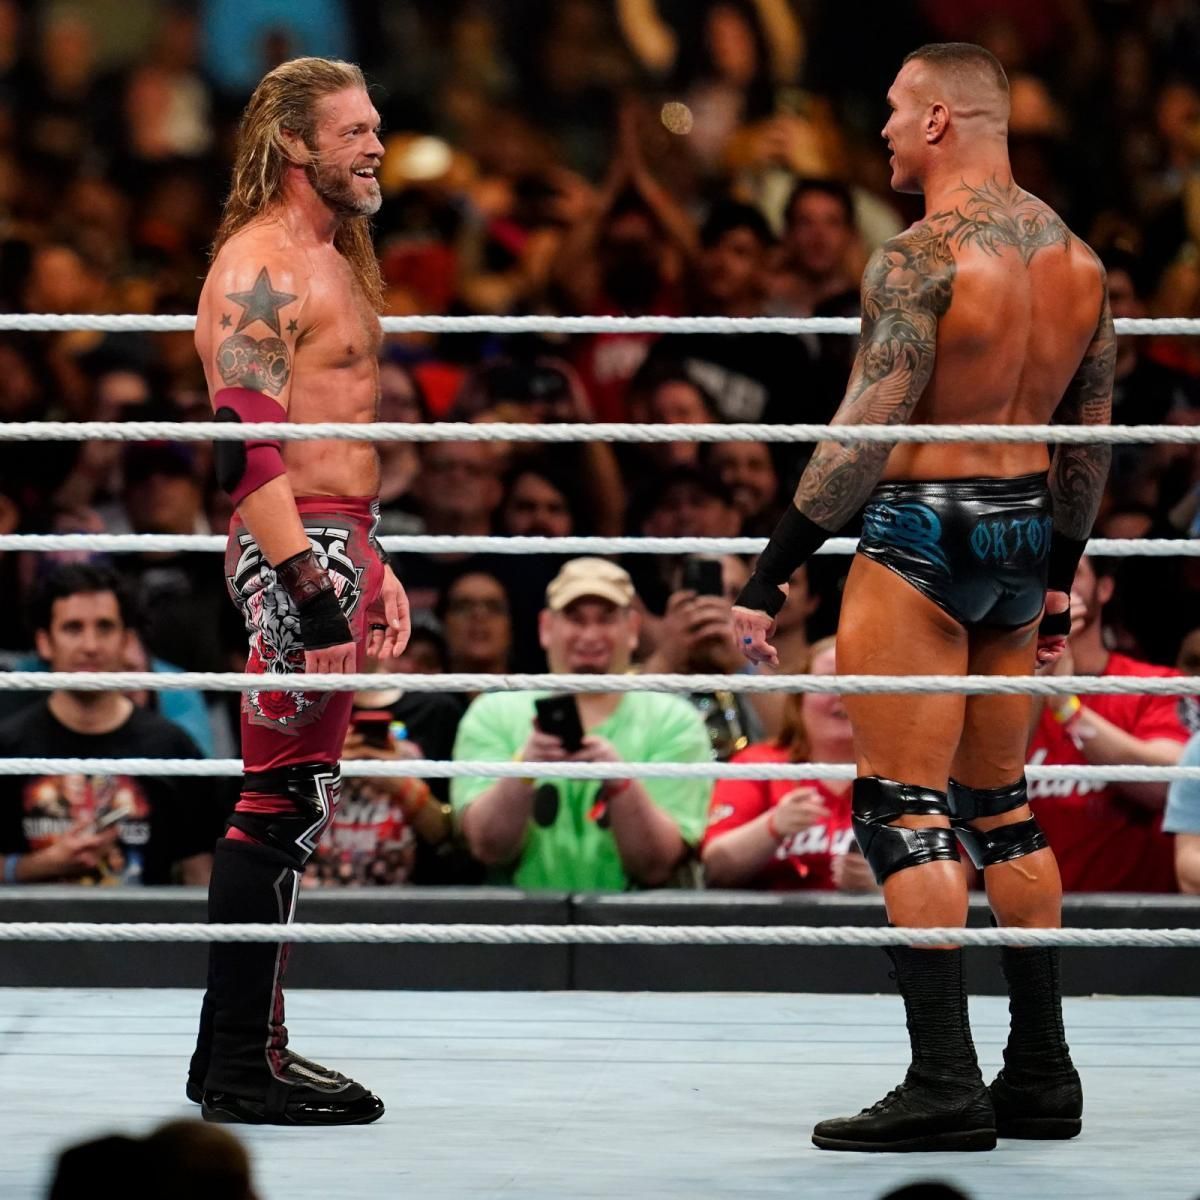 Photos: Edge returns, Lesnar dominates and McIntyre survives